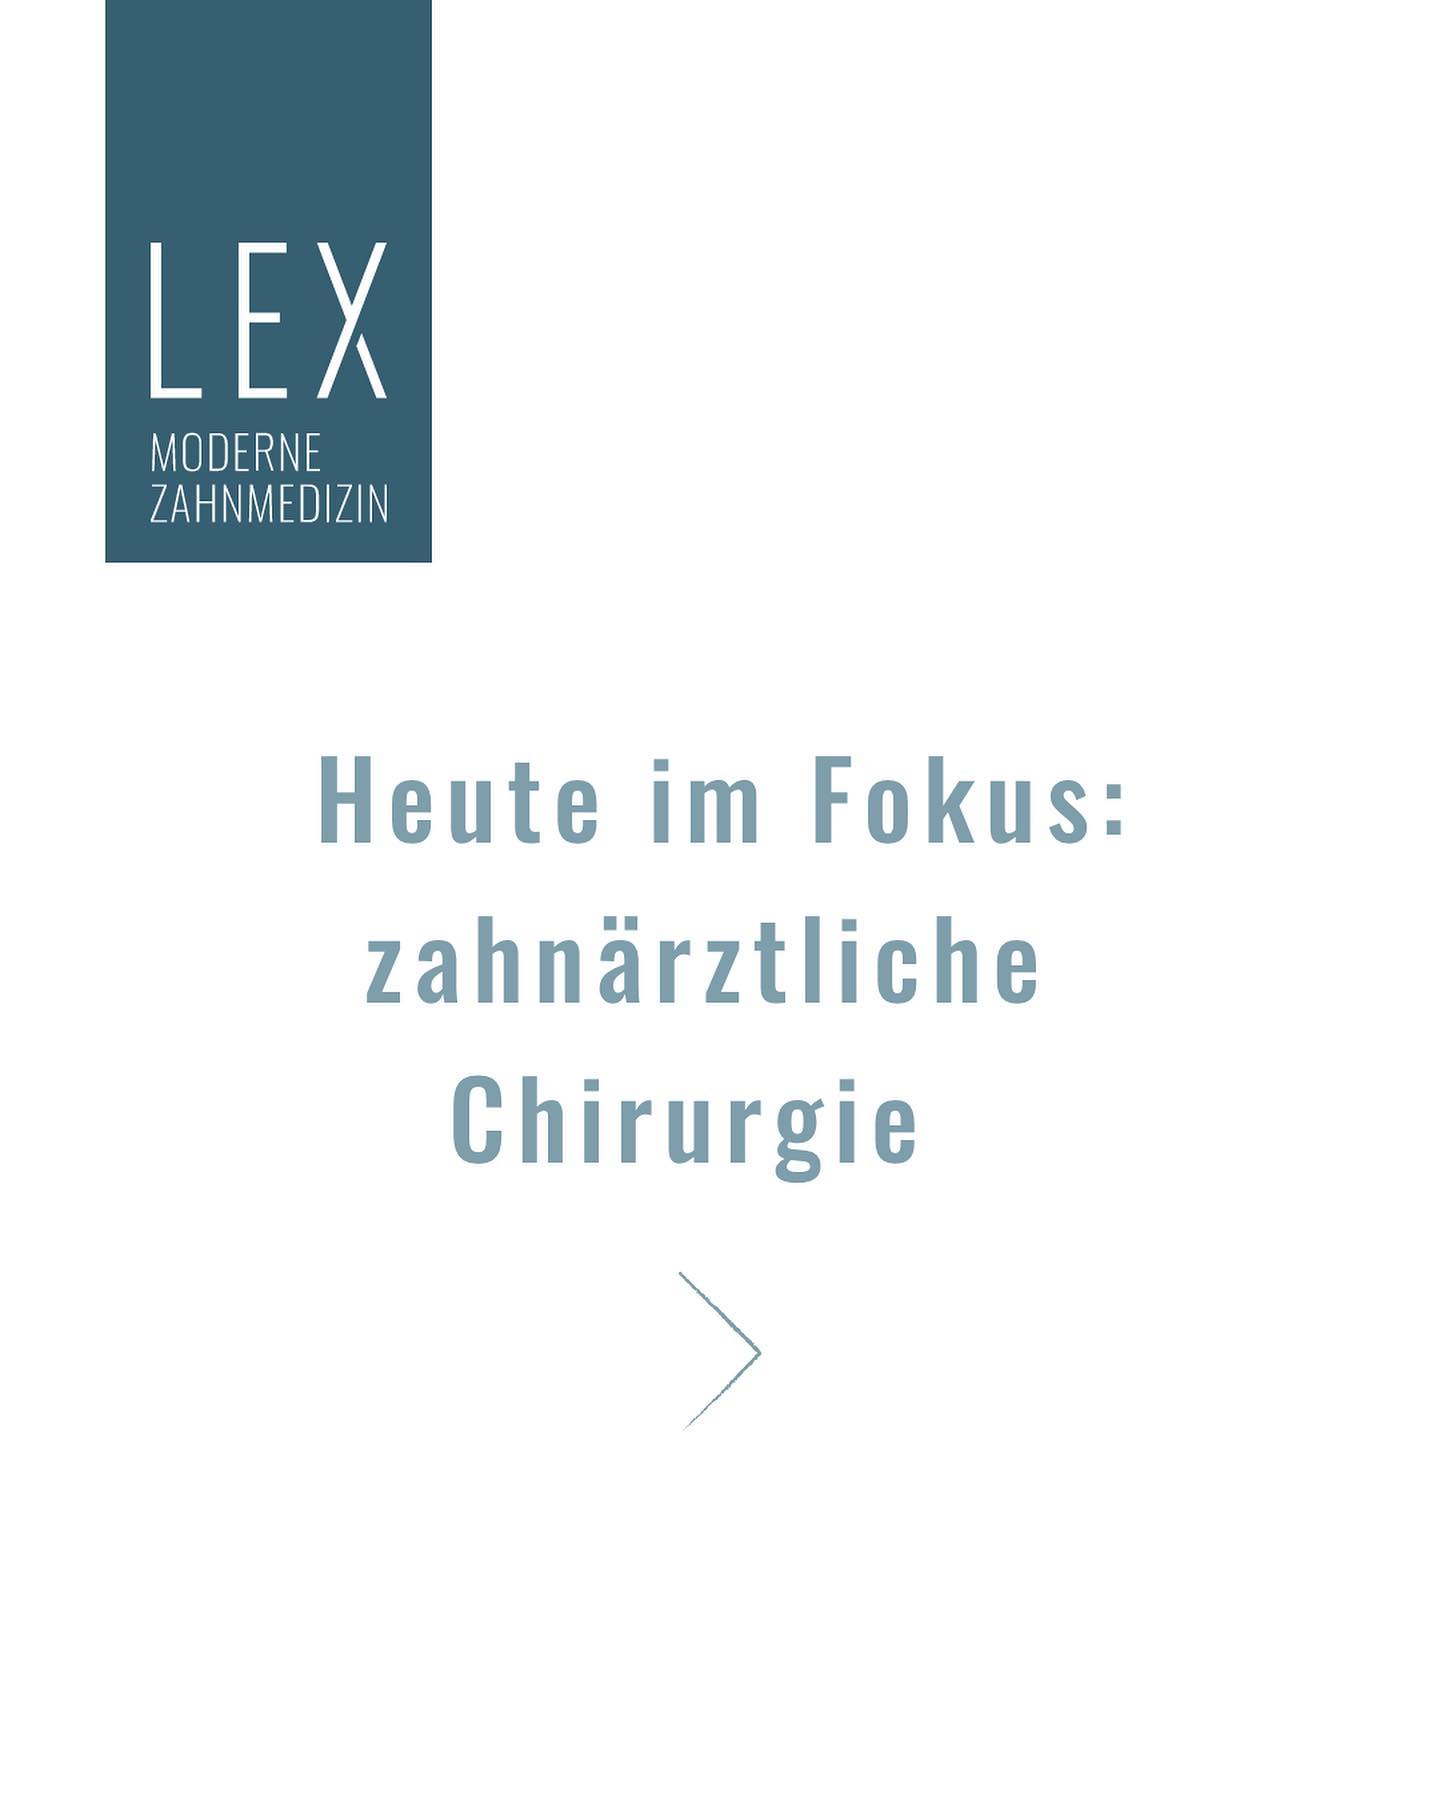 lex.zahnmedizin